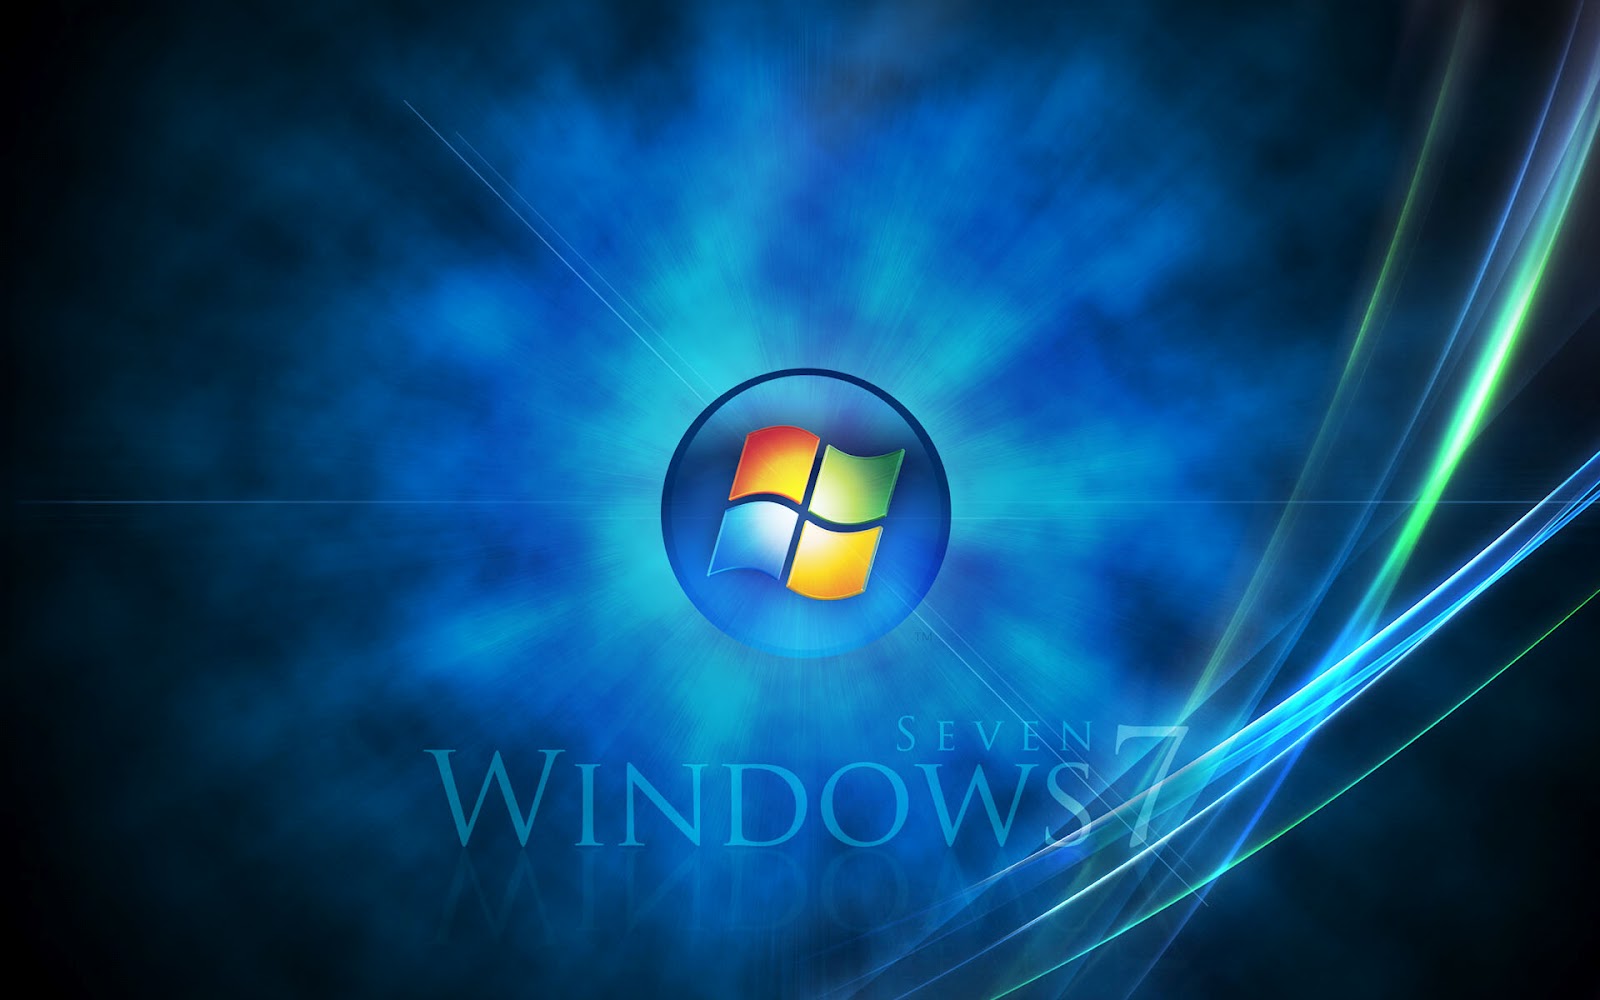 Windows 7 Desktop Backgrounds Free Desktop Backgrounds for Windows 7